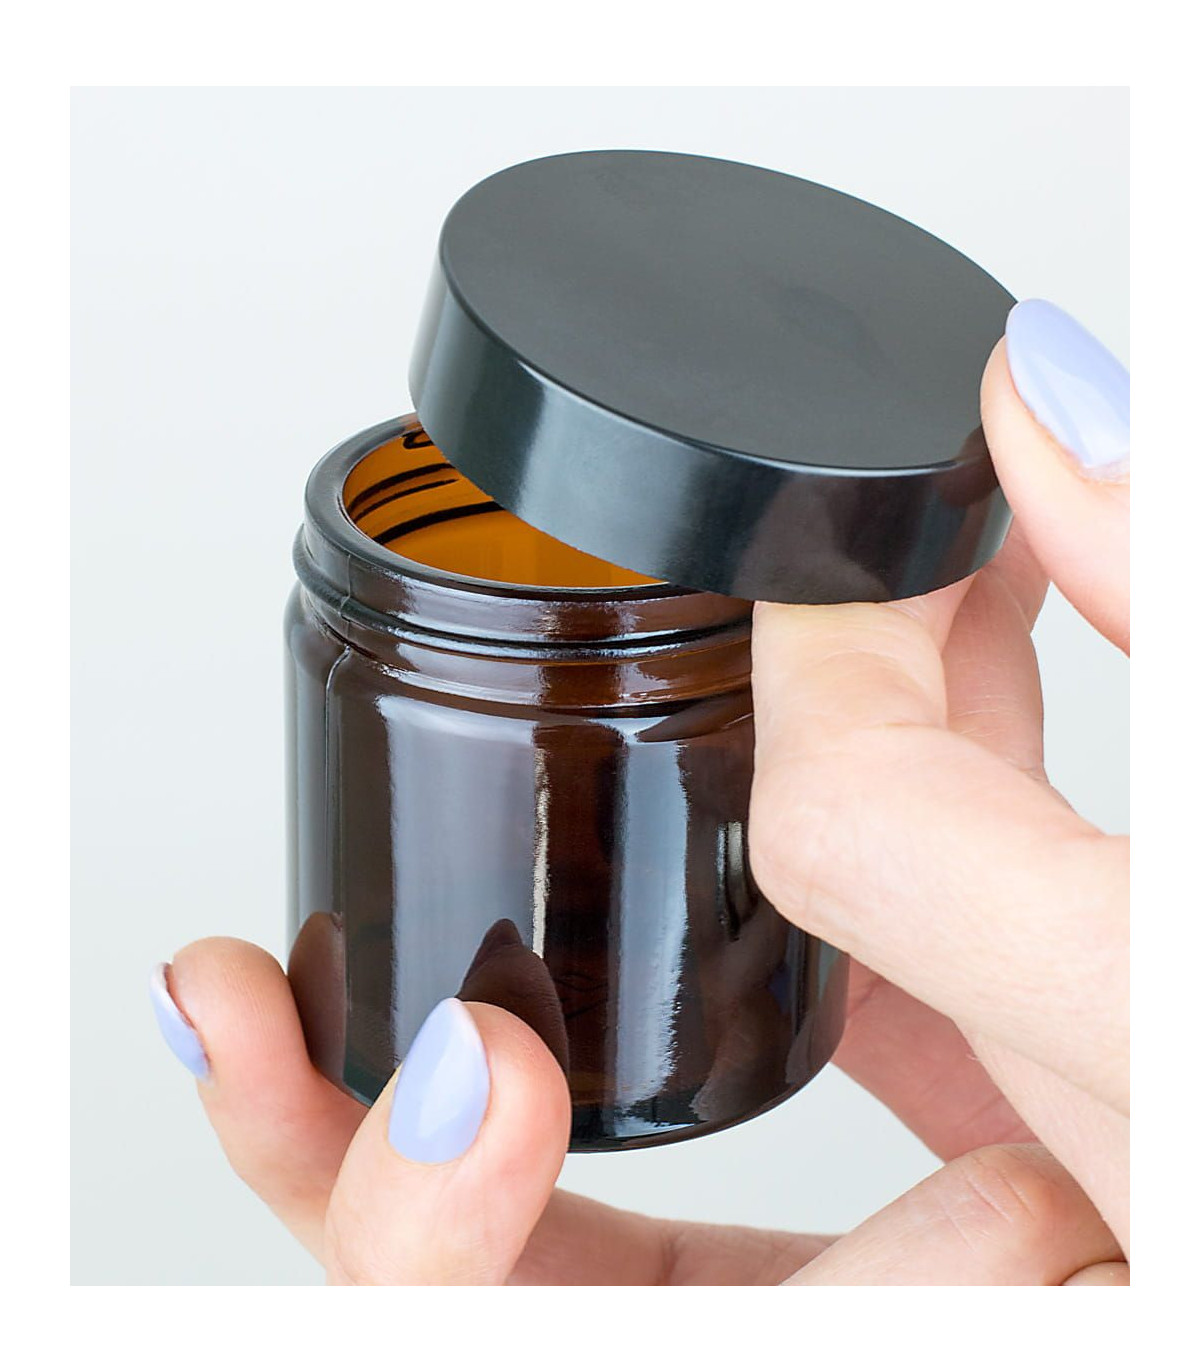 Black lid for Ambra, Clara jars of 60 ml